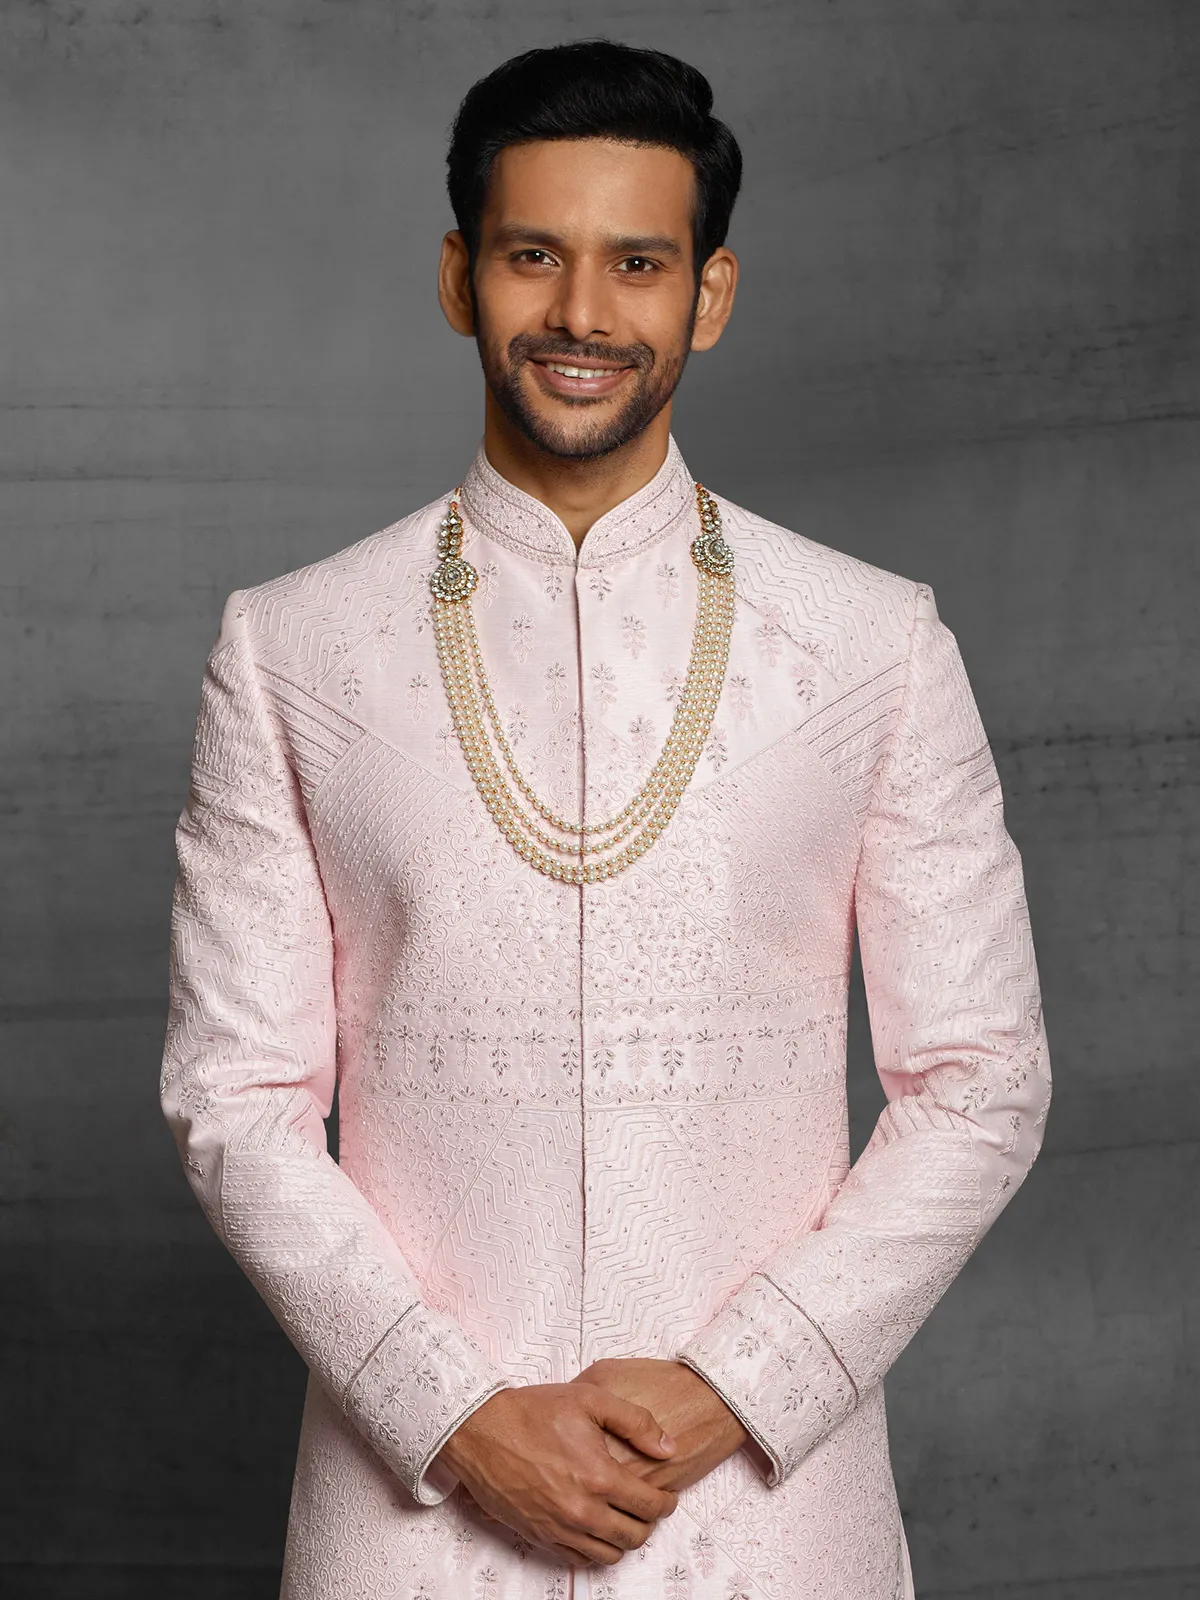 Pink color silk wedding wear dual layer sherwani